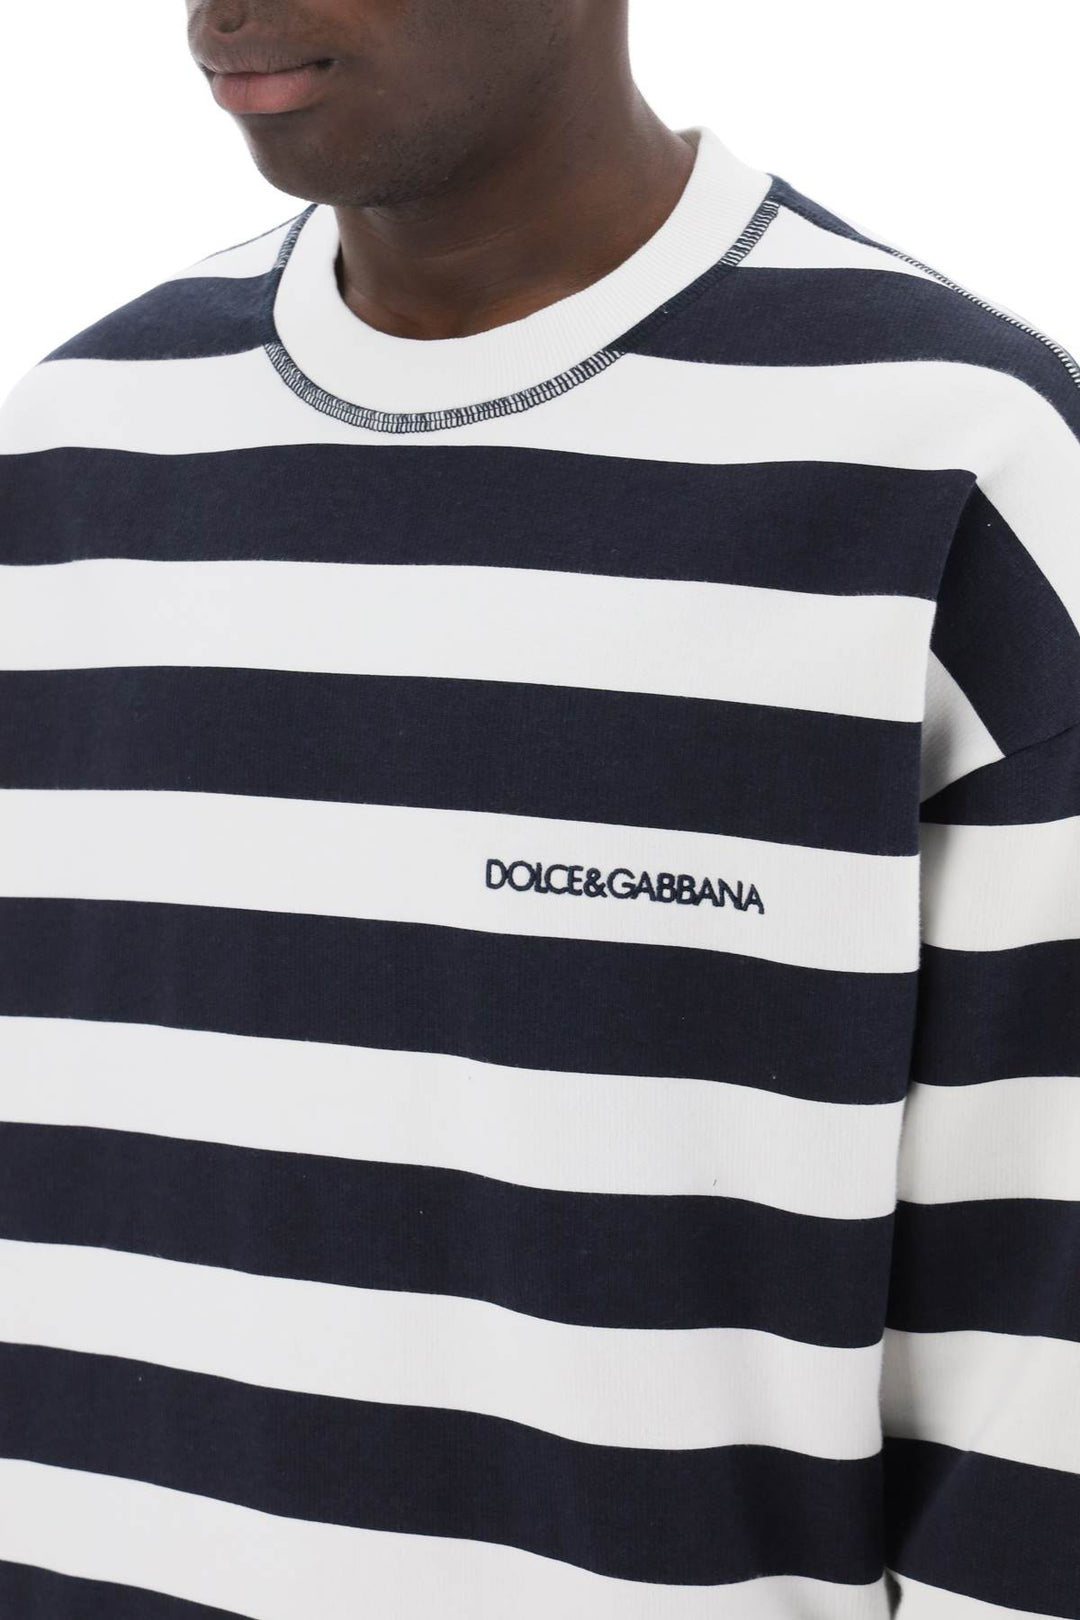 Dolce & Gabbana Striped Sweatshirt With Embroidered Logo   White